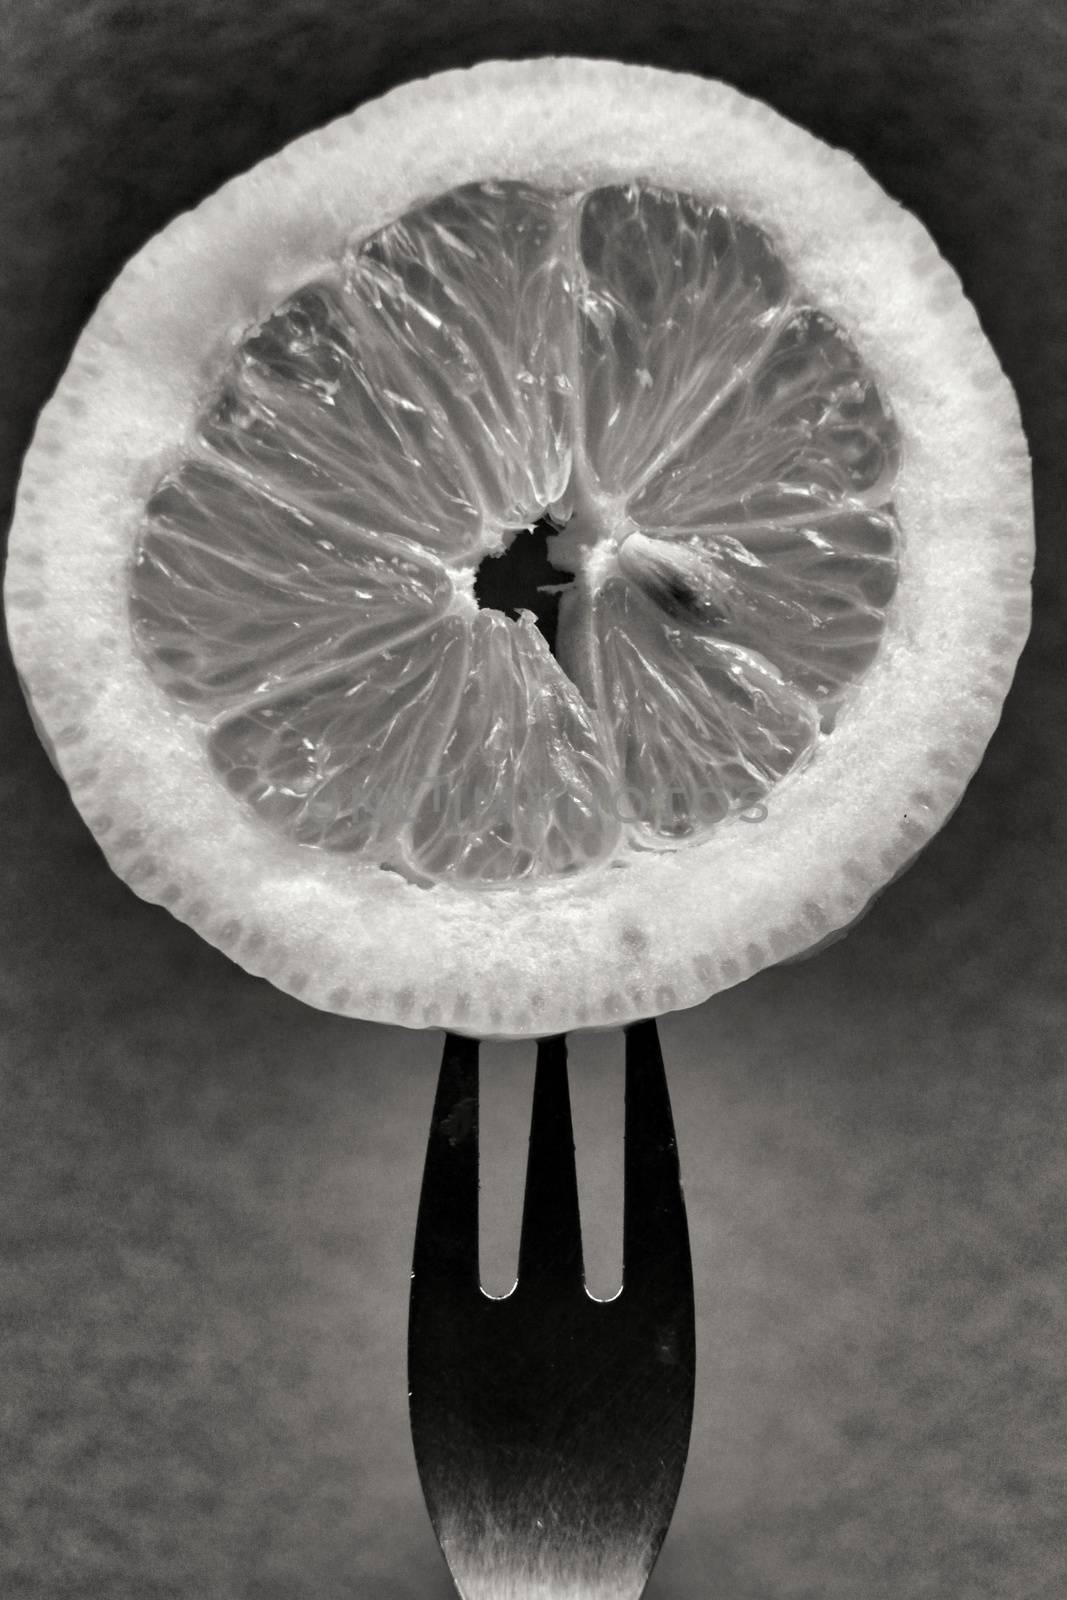 Slice of lemon pricked on fork. Monochrome photography.